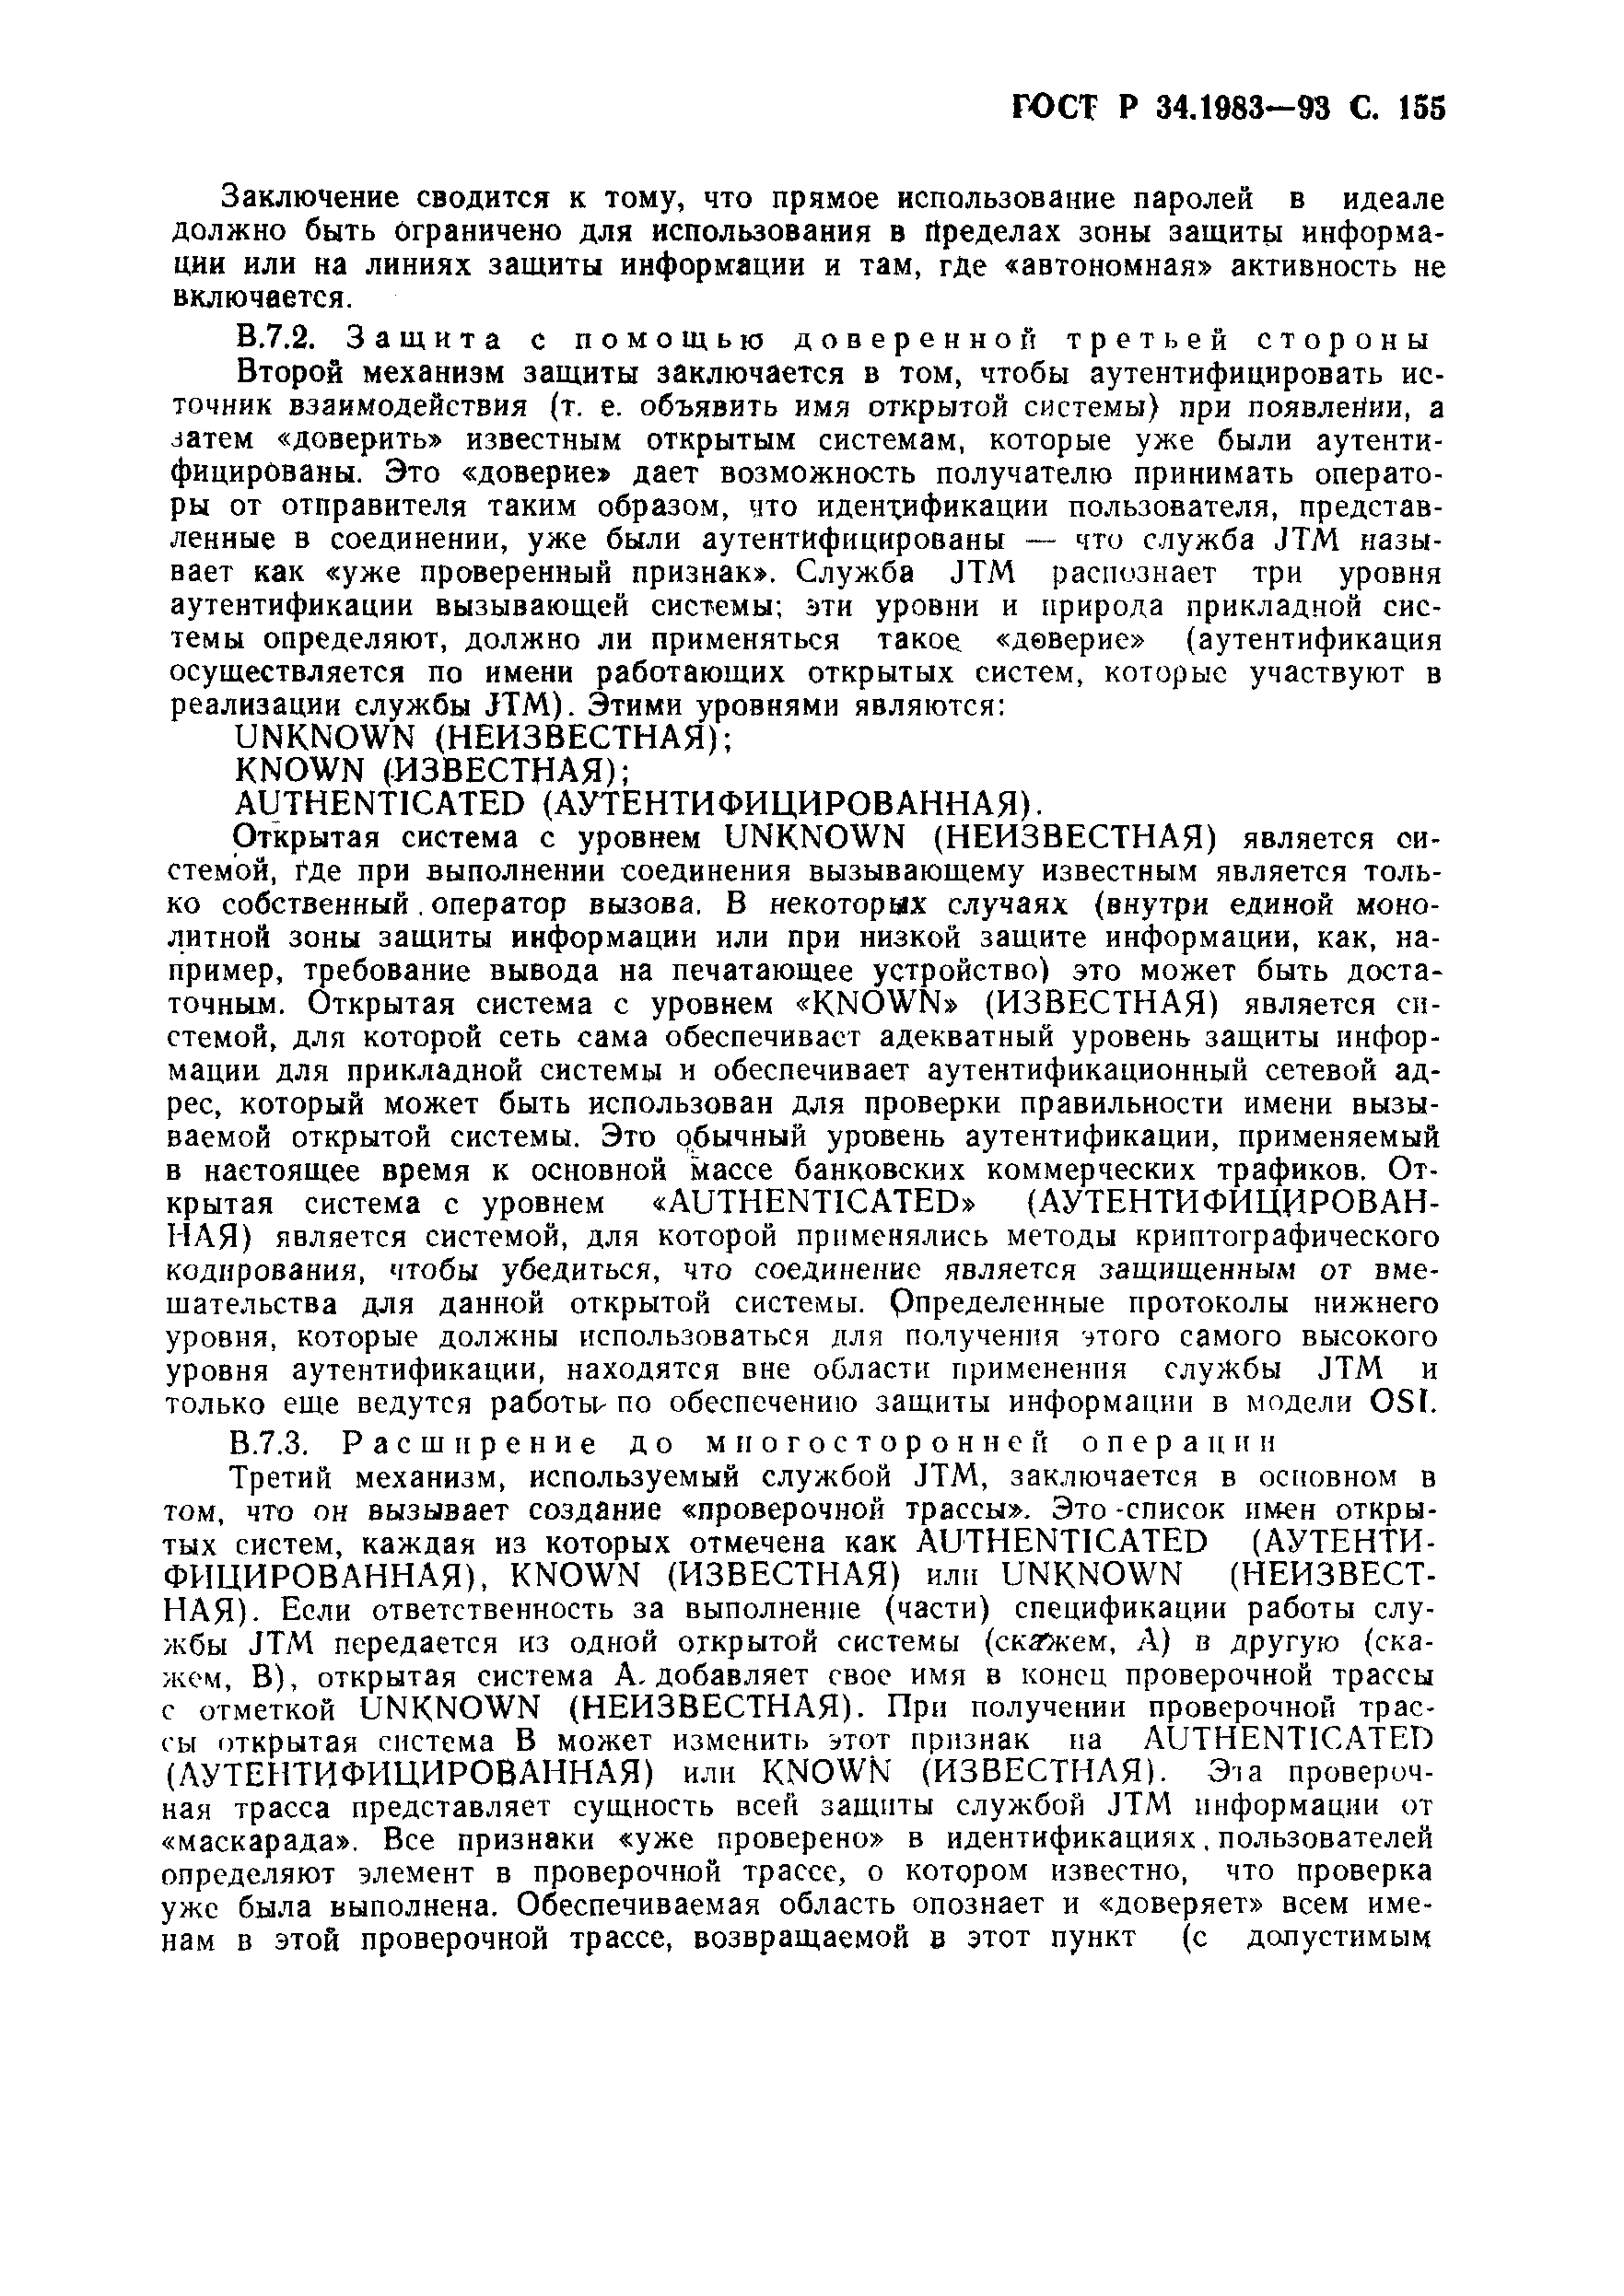 ГОСТ Р 34.1983-93. Страница 156